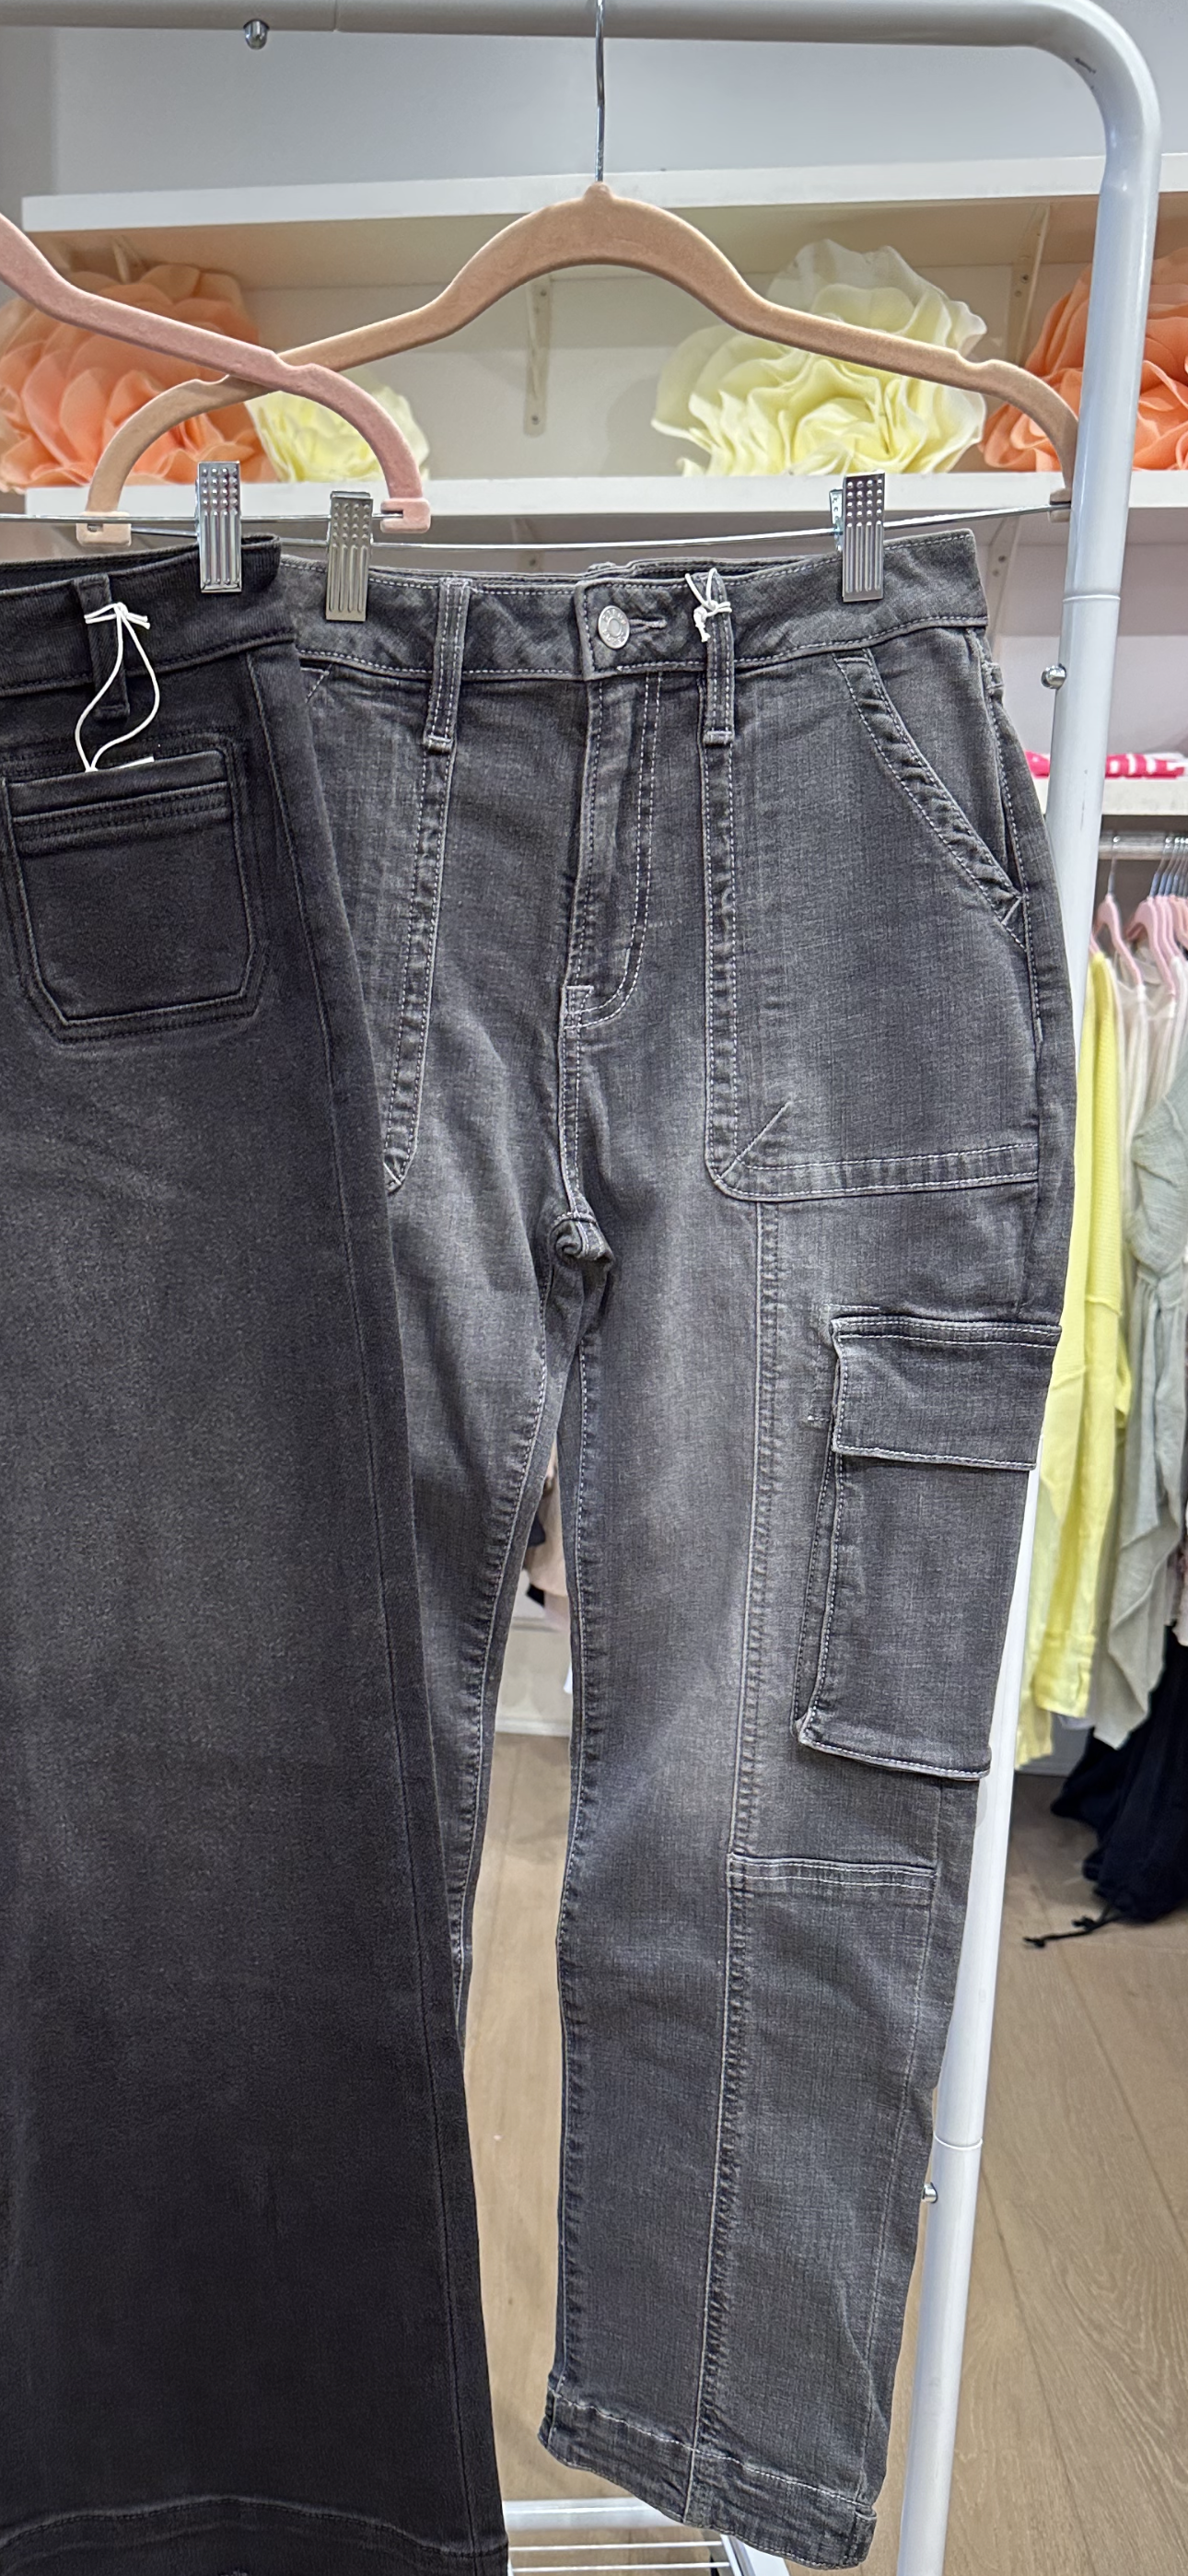 The Sumi Jeans in Medium Gray